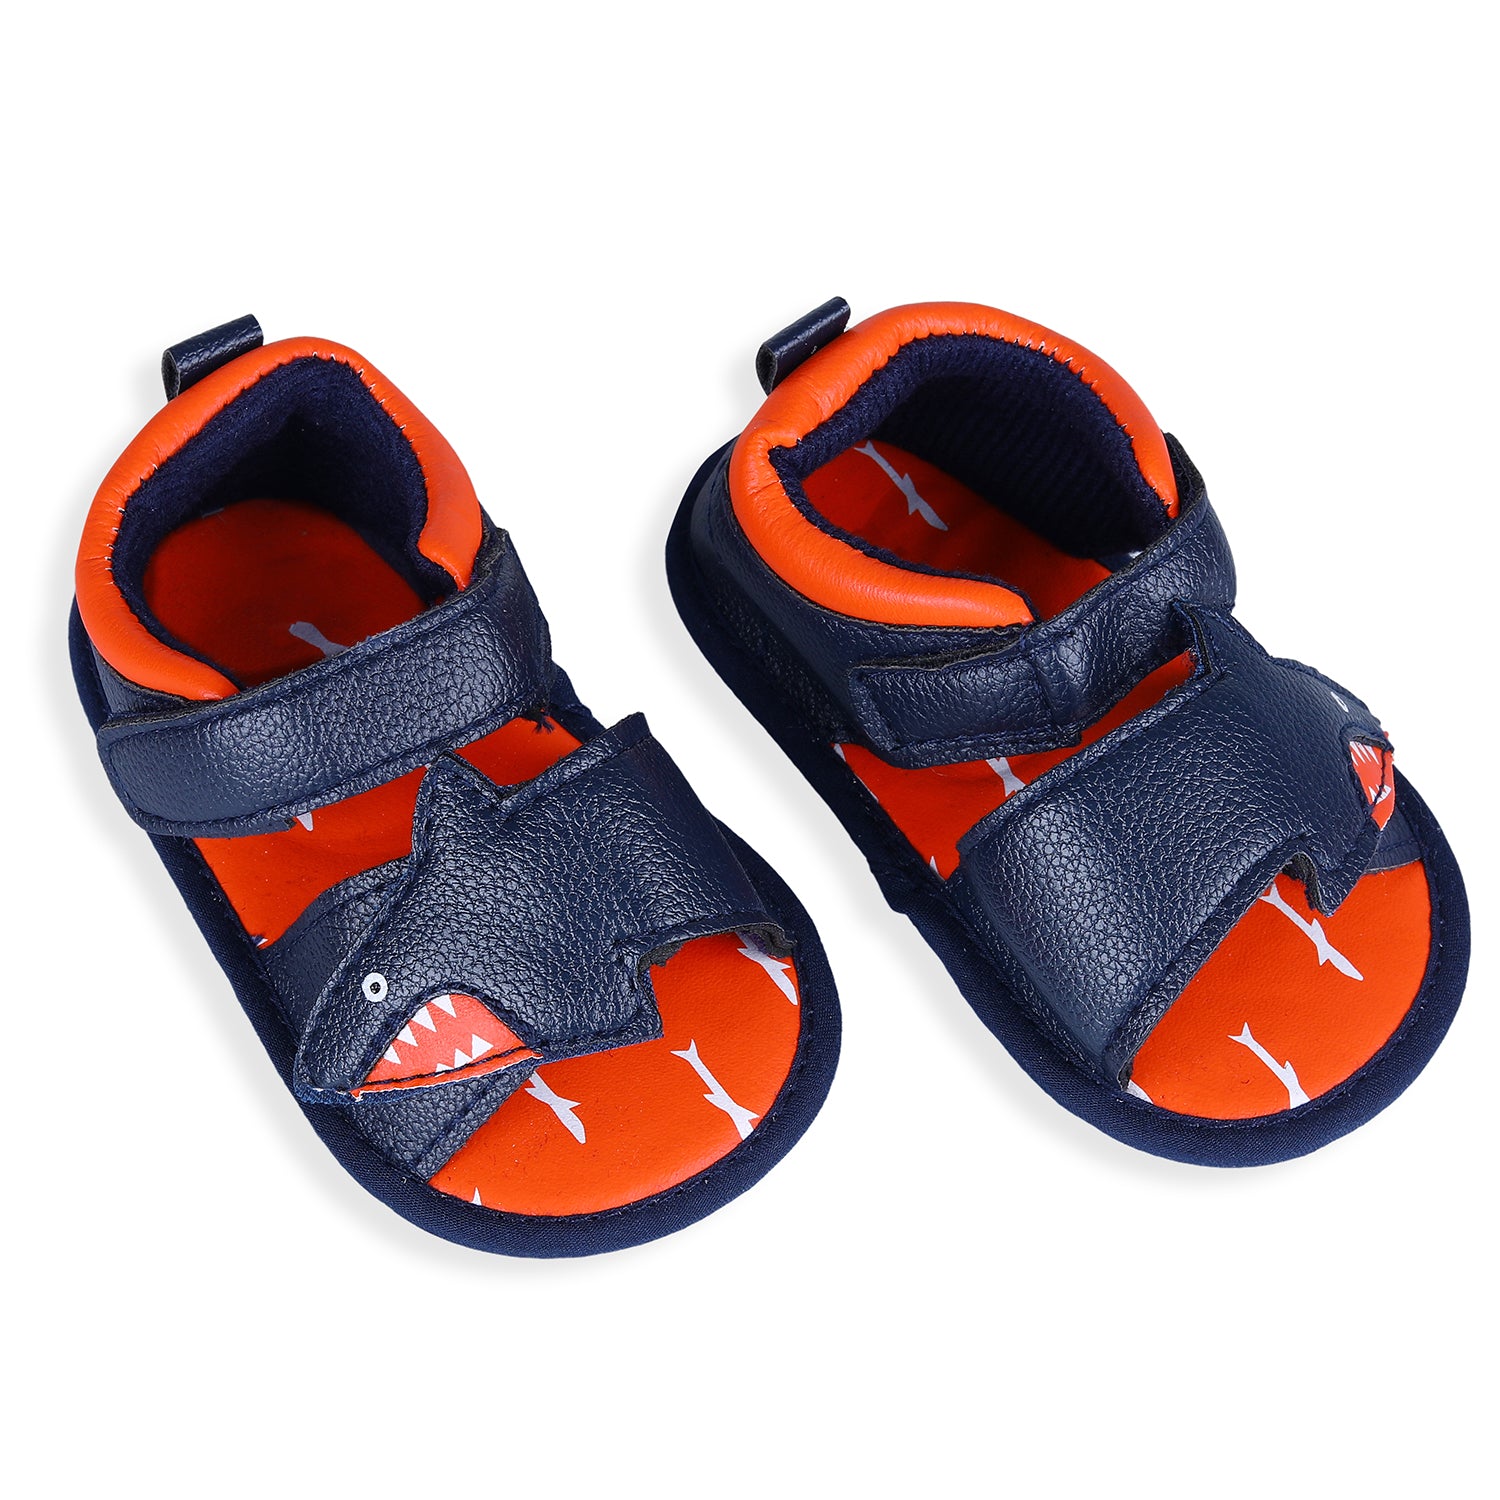 Shark Anti-Slip PU Leather Sole Sandals - Blue And Orange - Baby Moo